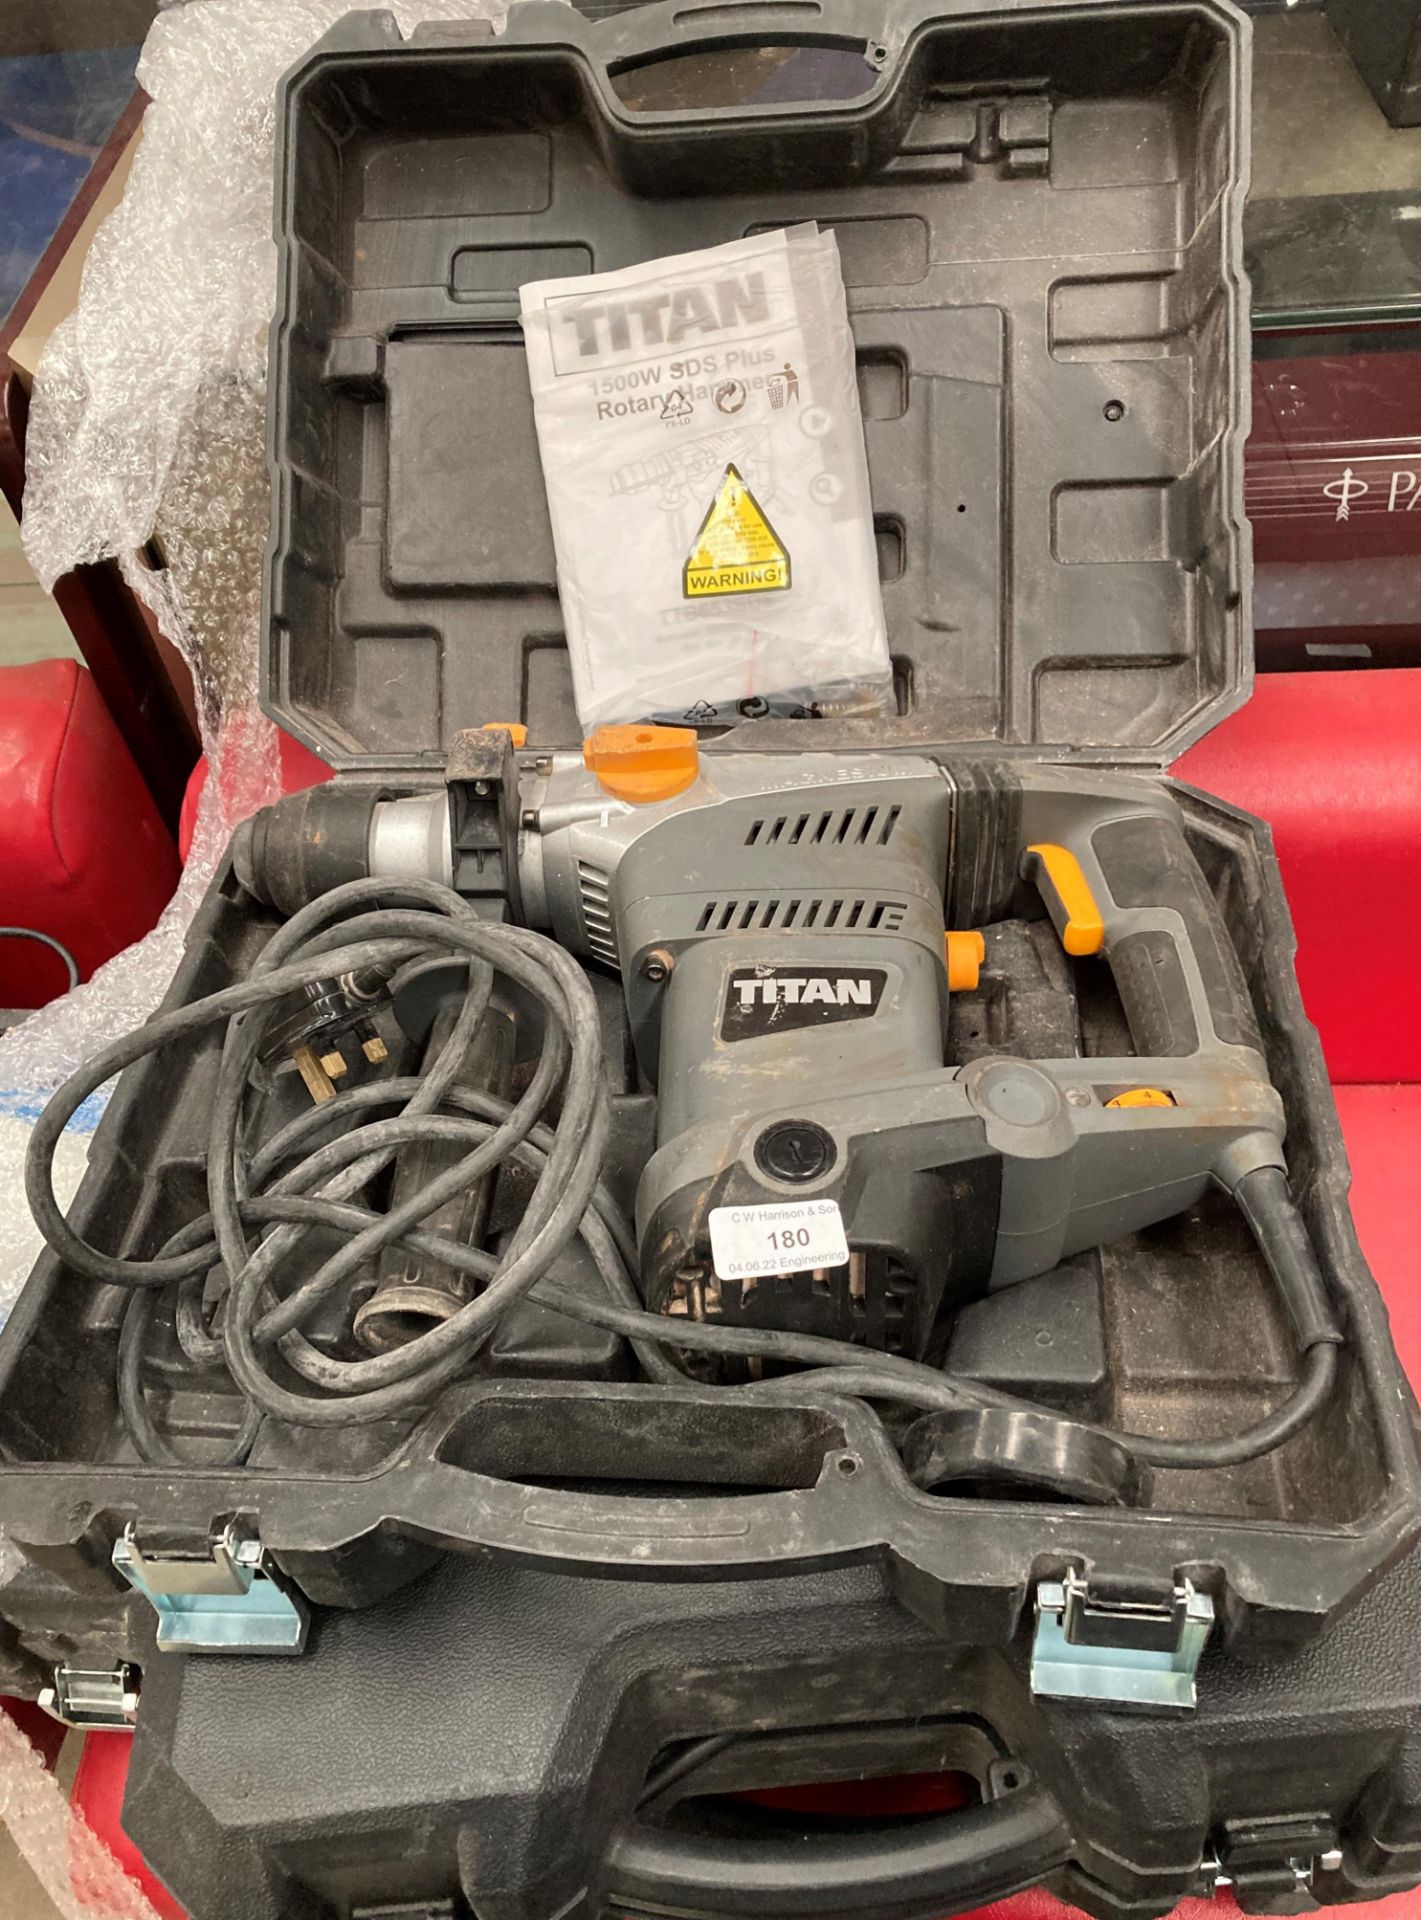 Titan 1500w SDS+ rotary hammer drill in case